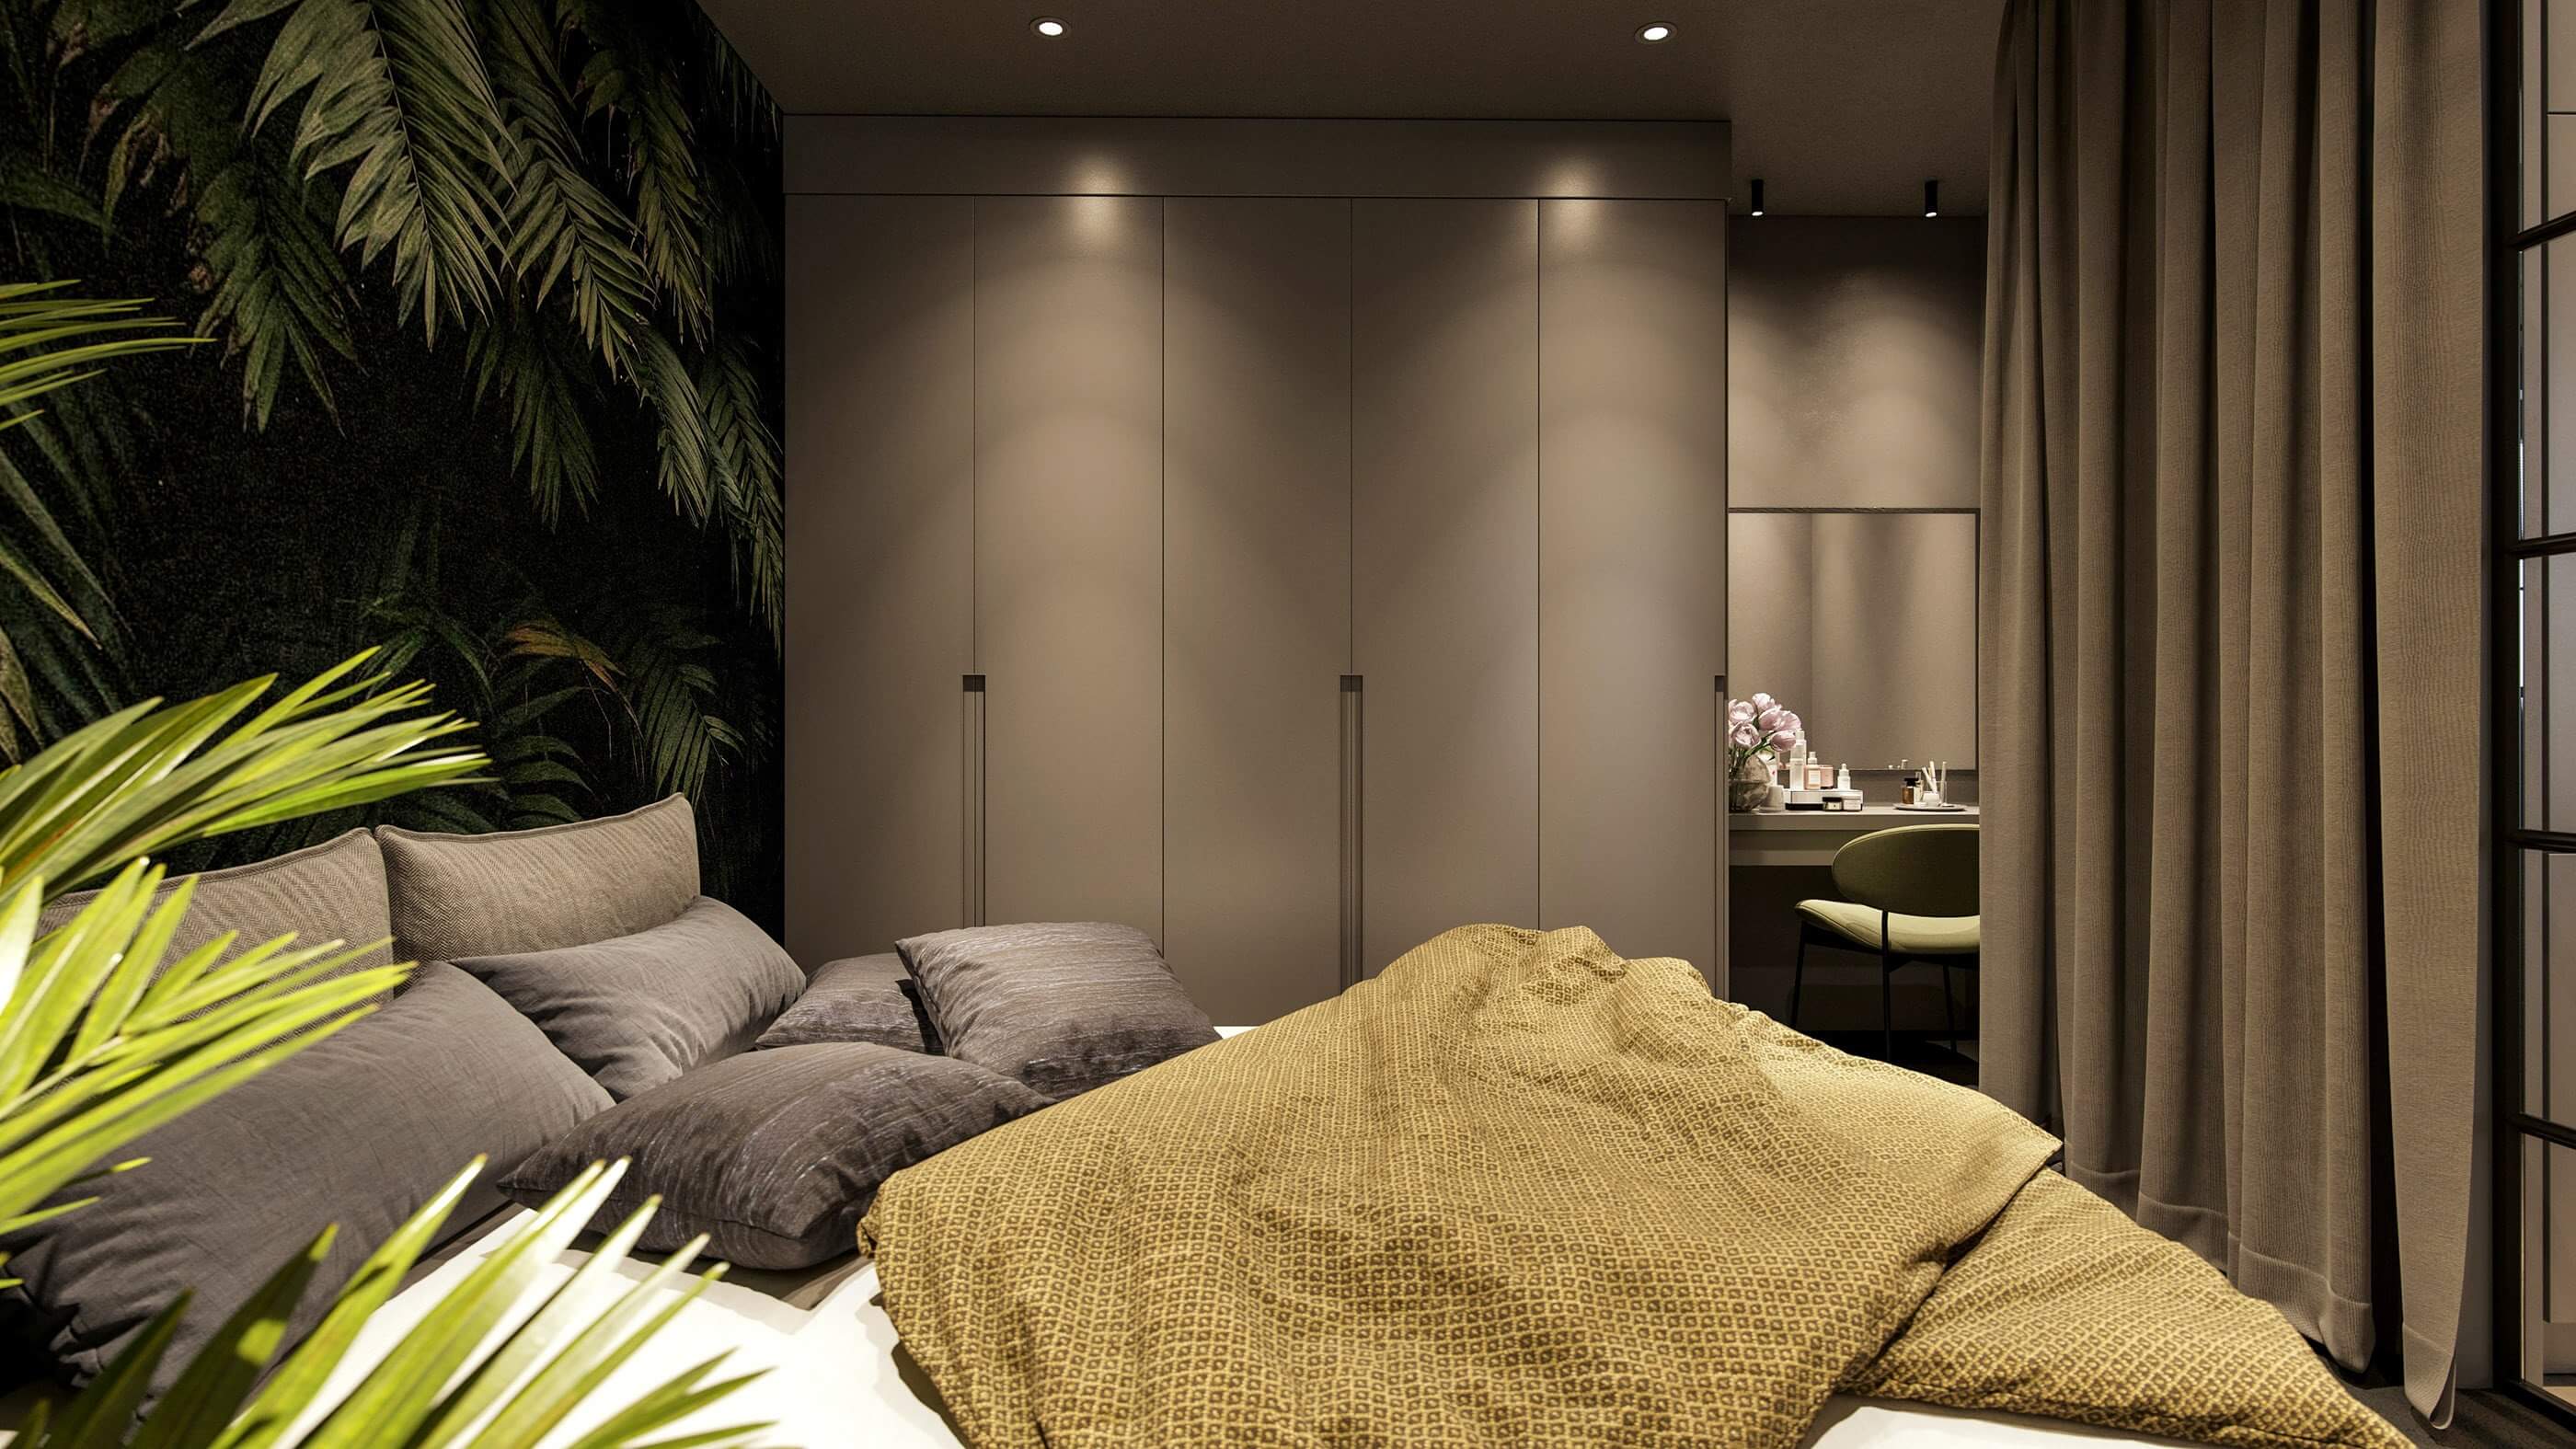 Jungle paradise apartment bedroom wardrobe - cgi visualization